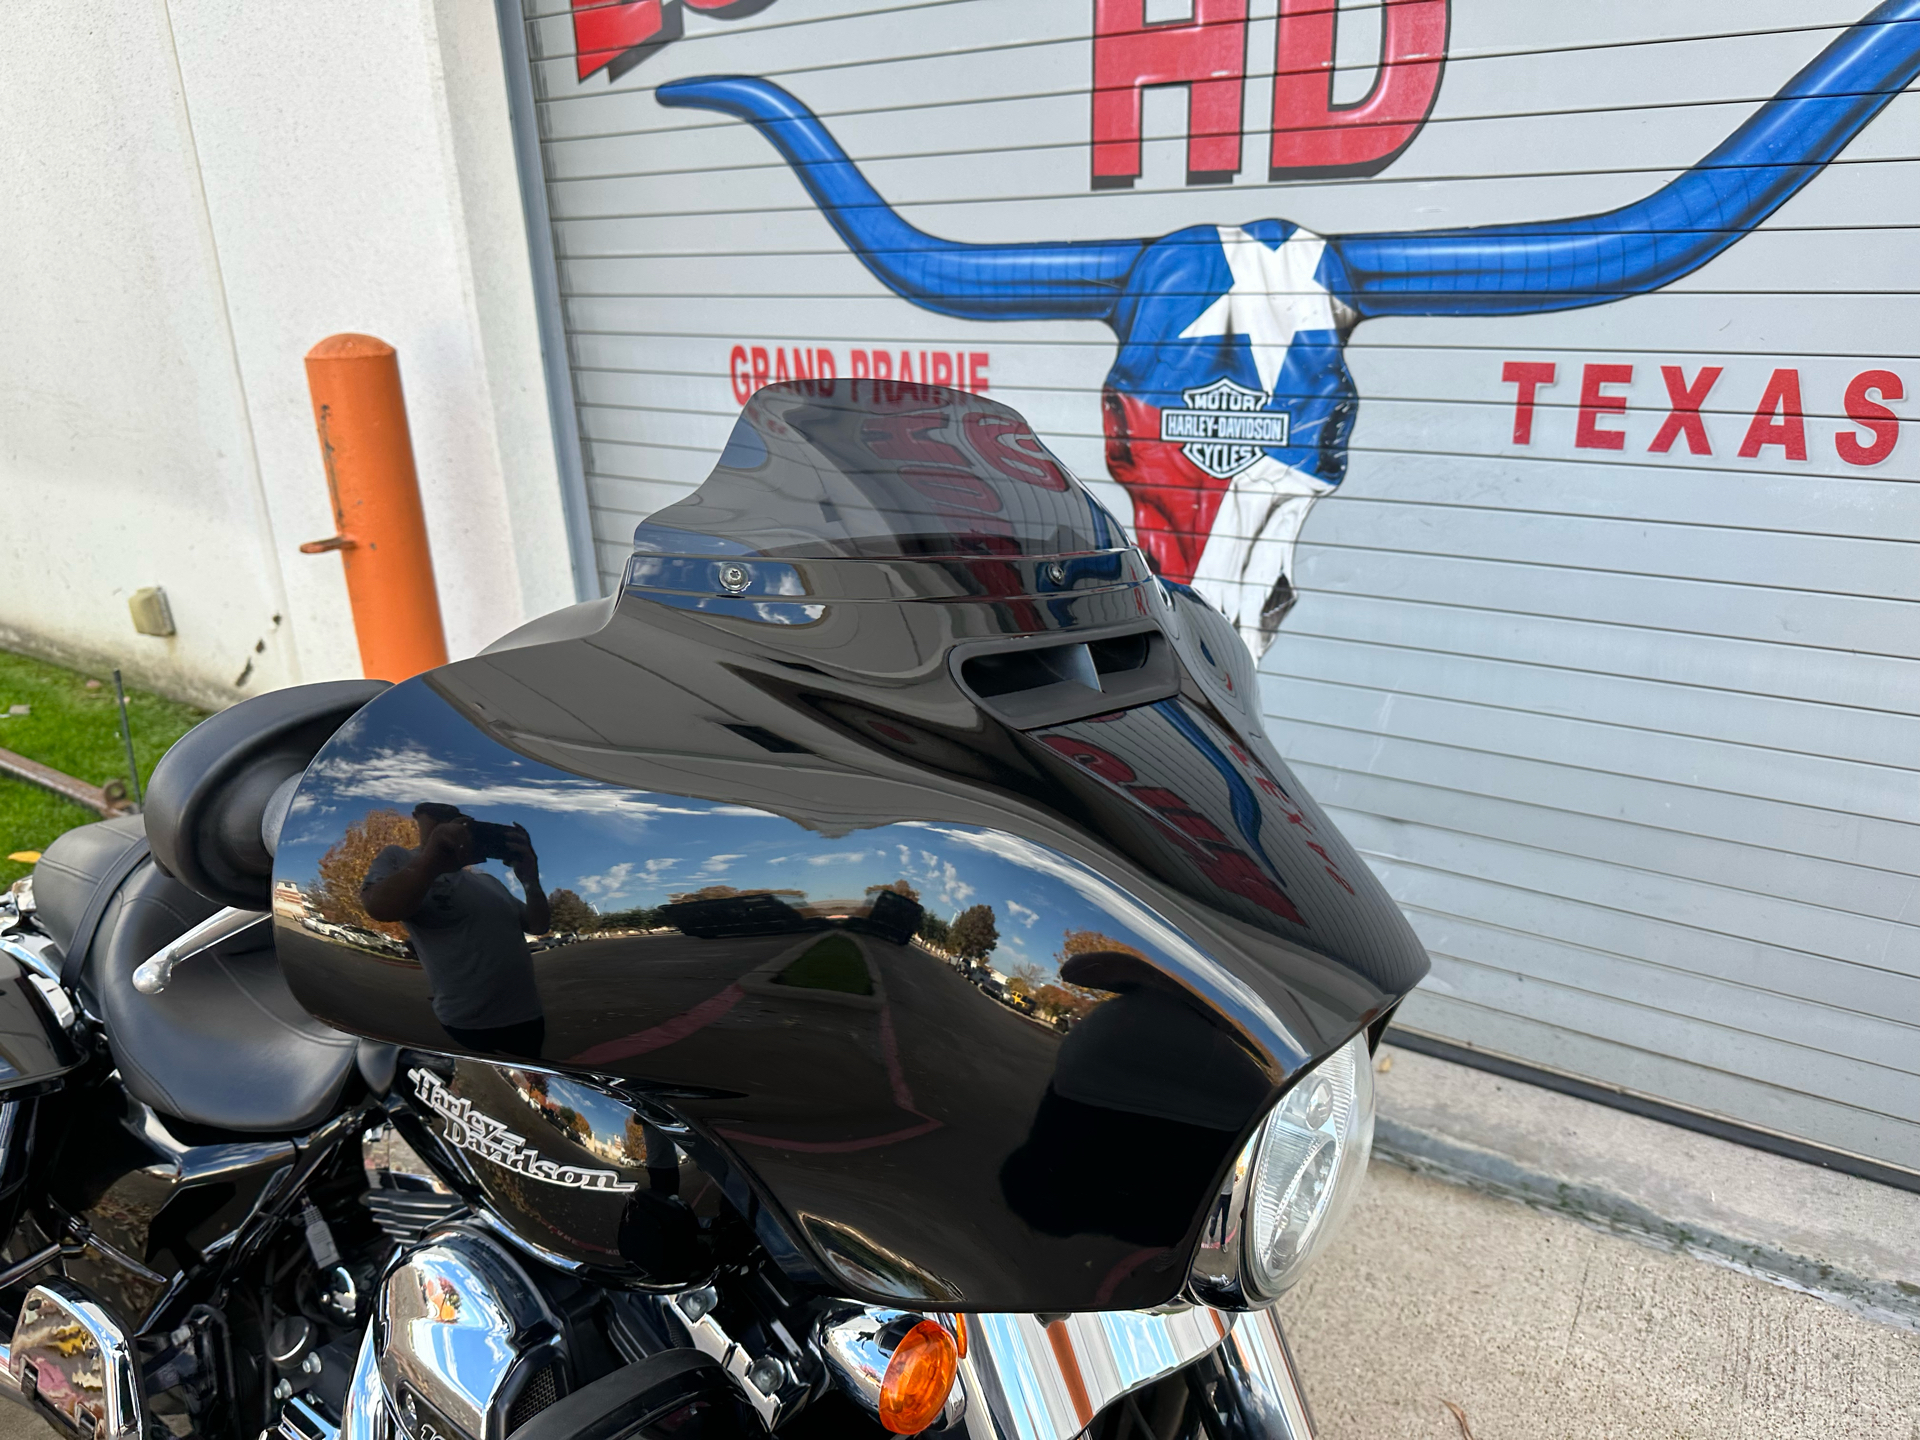 2015 Harley-Davidson Street Glide® in Grand Prairie, Texas - Photo 2